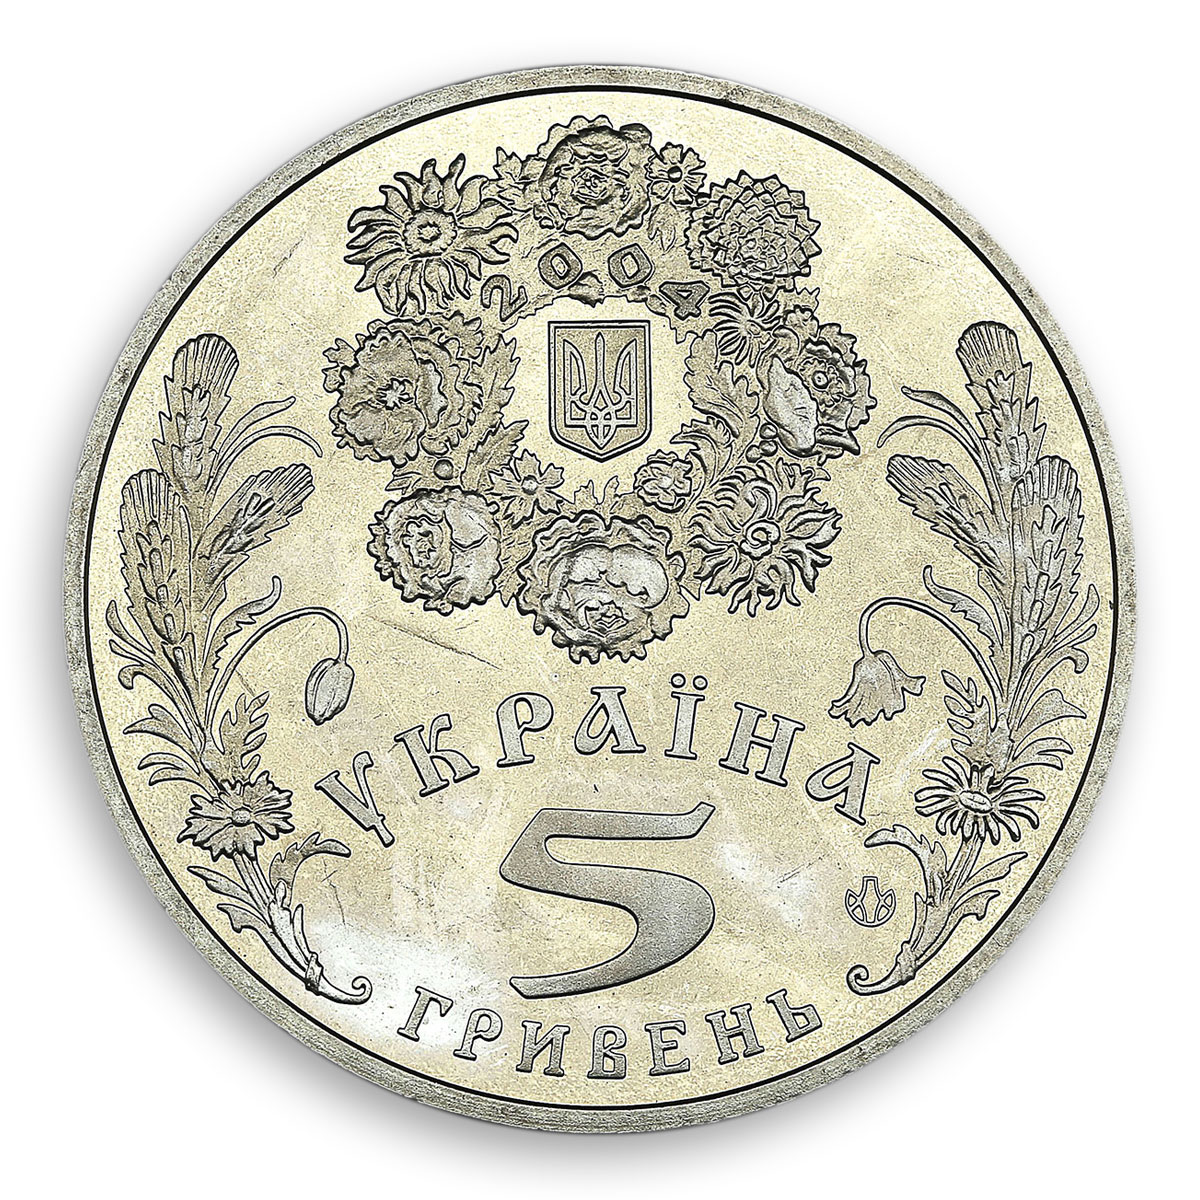 Ukraine 5 hryvnia Pentecost feast orthodox holiday celebration nickel coin 2004